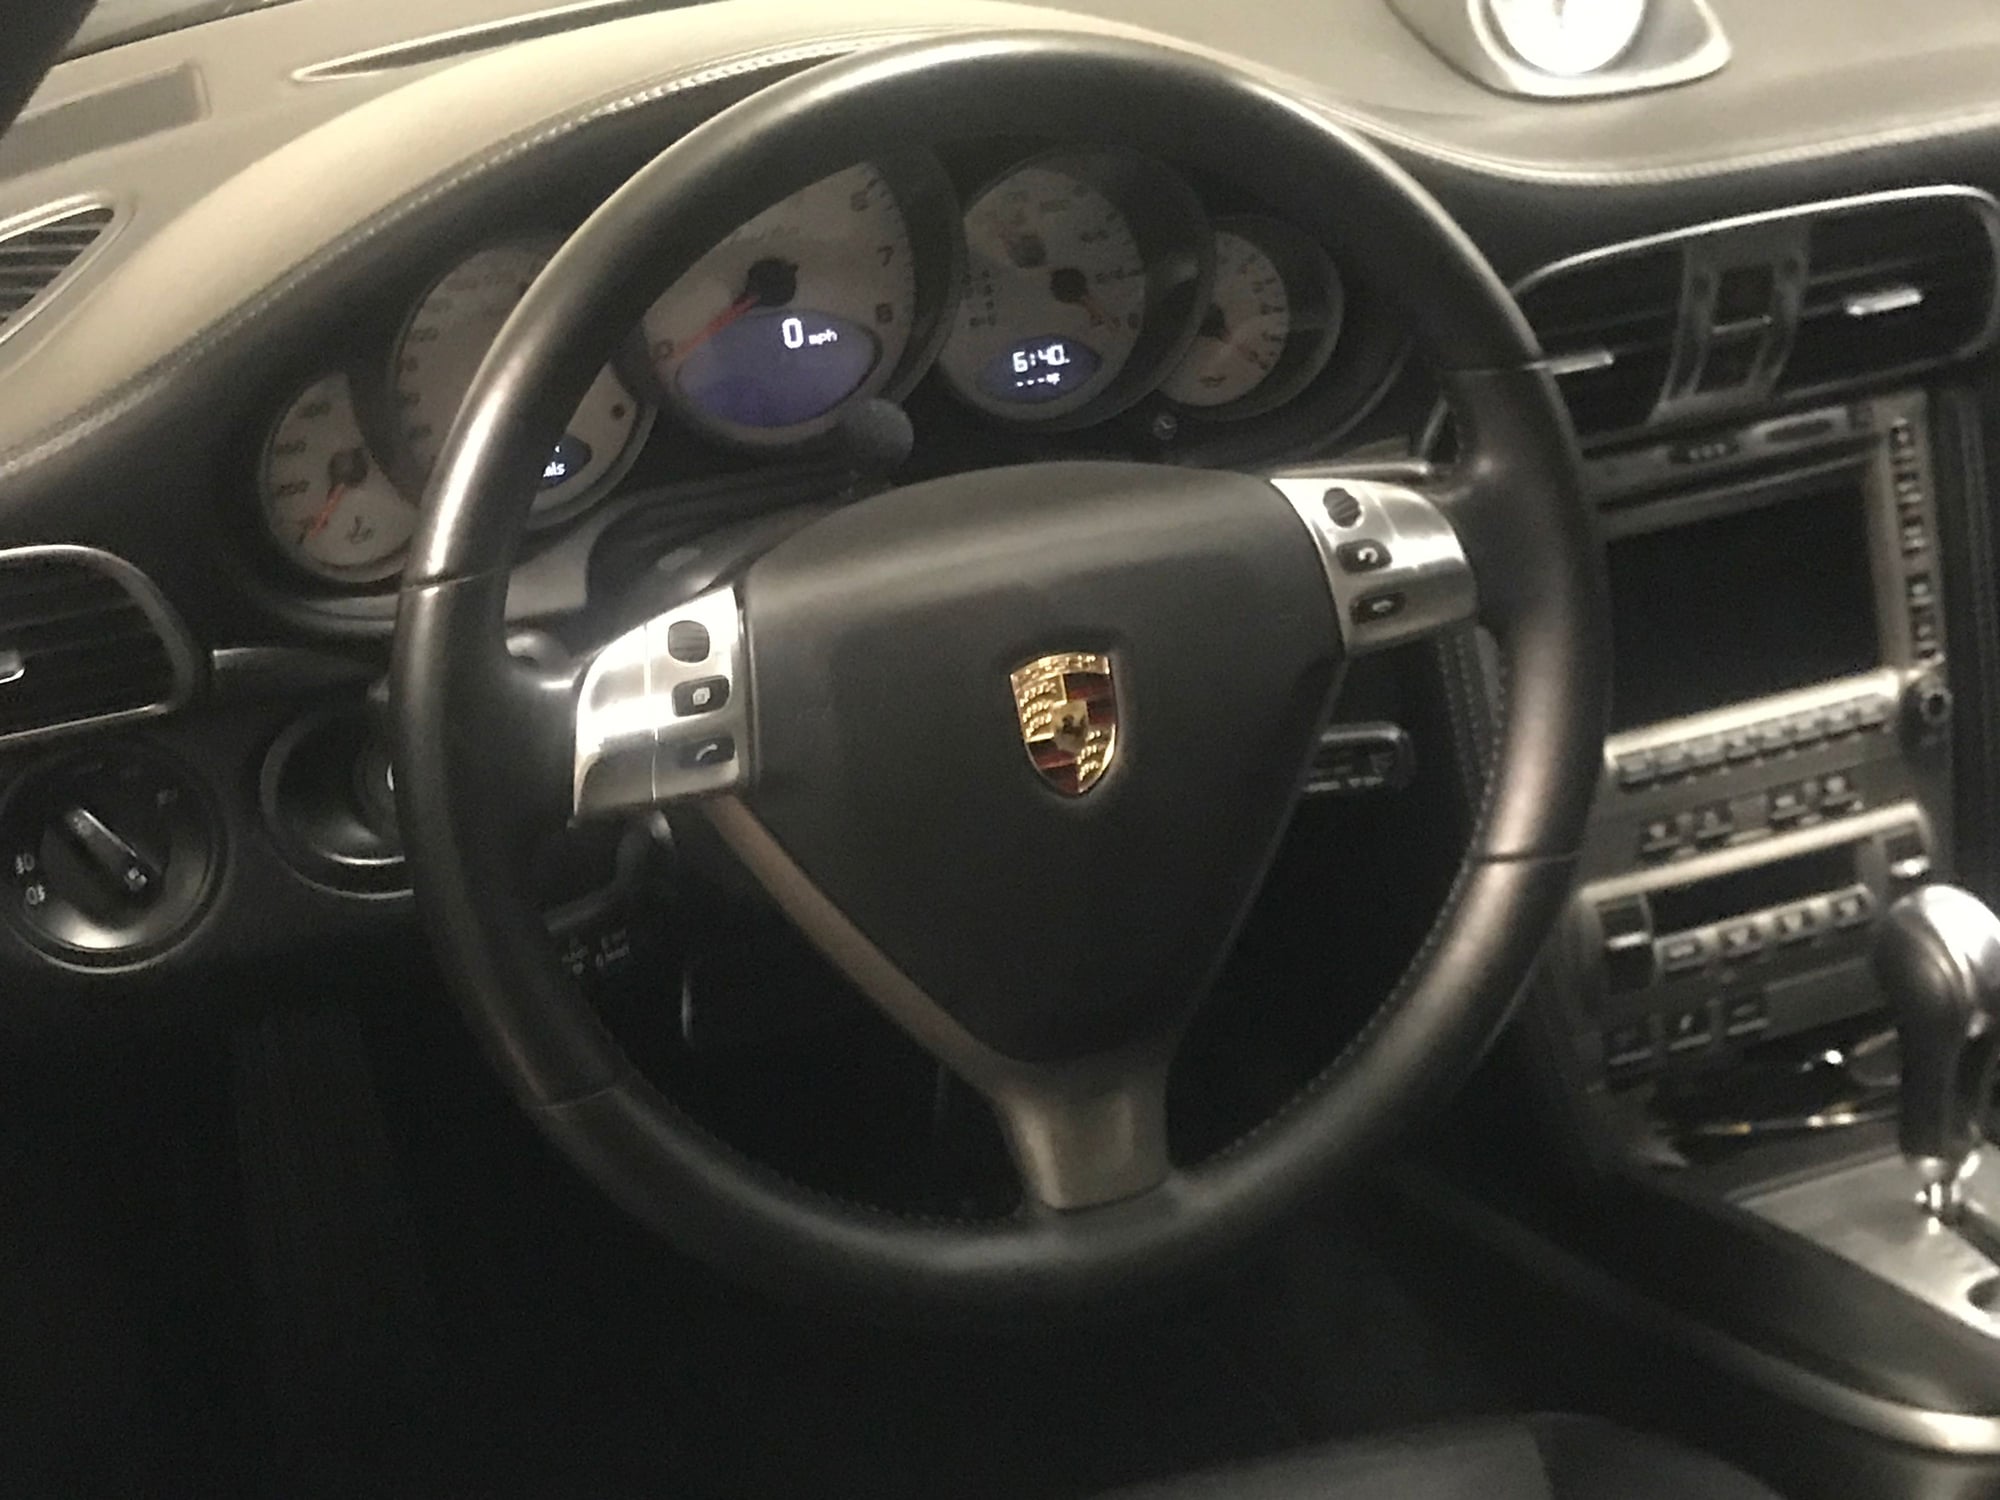 Interior/Upholstery - 997 TT steering wheel - Used - 2005 to 2009 Porsche 911 - La, CA 90274, United States